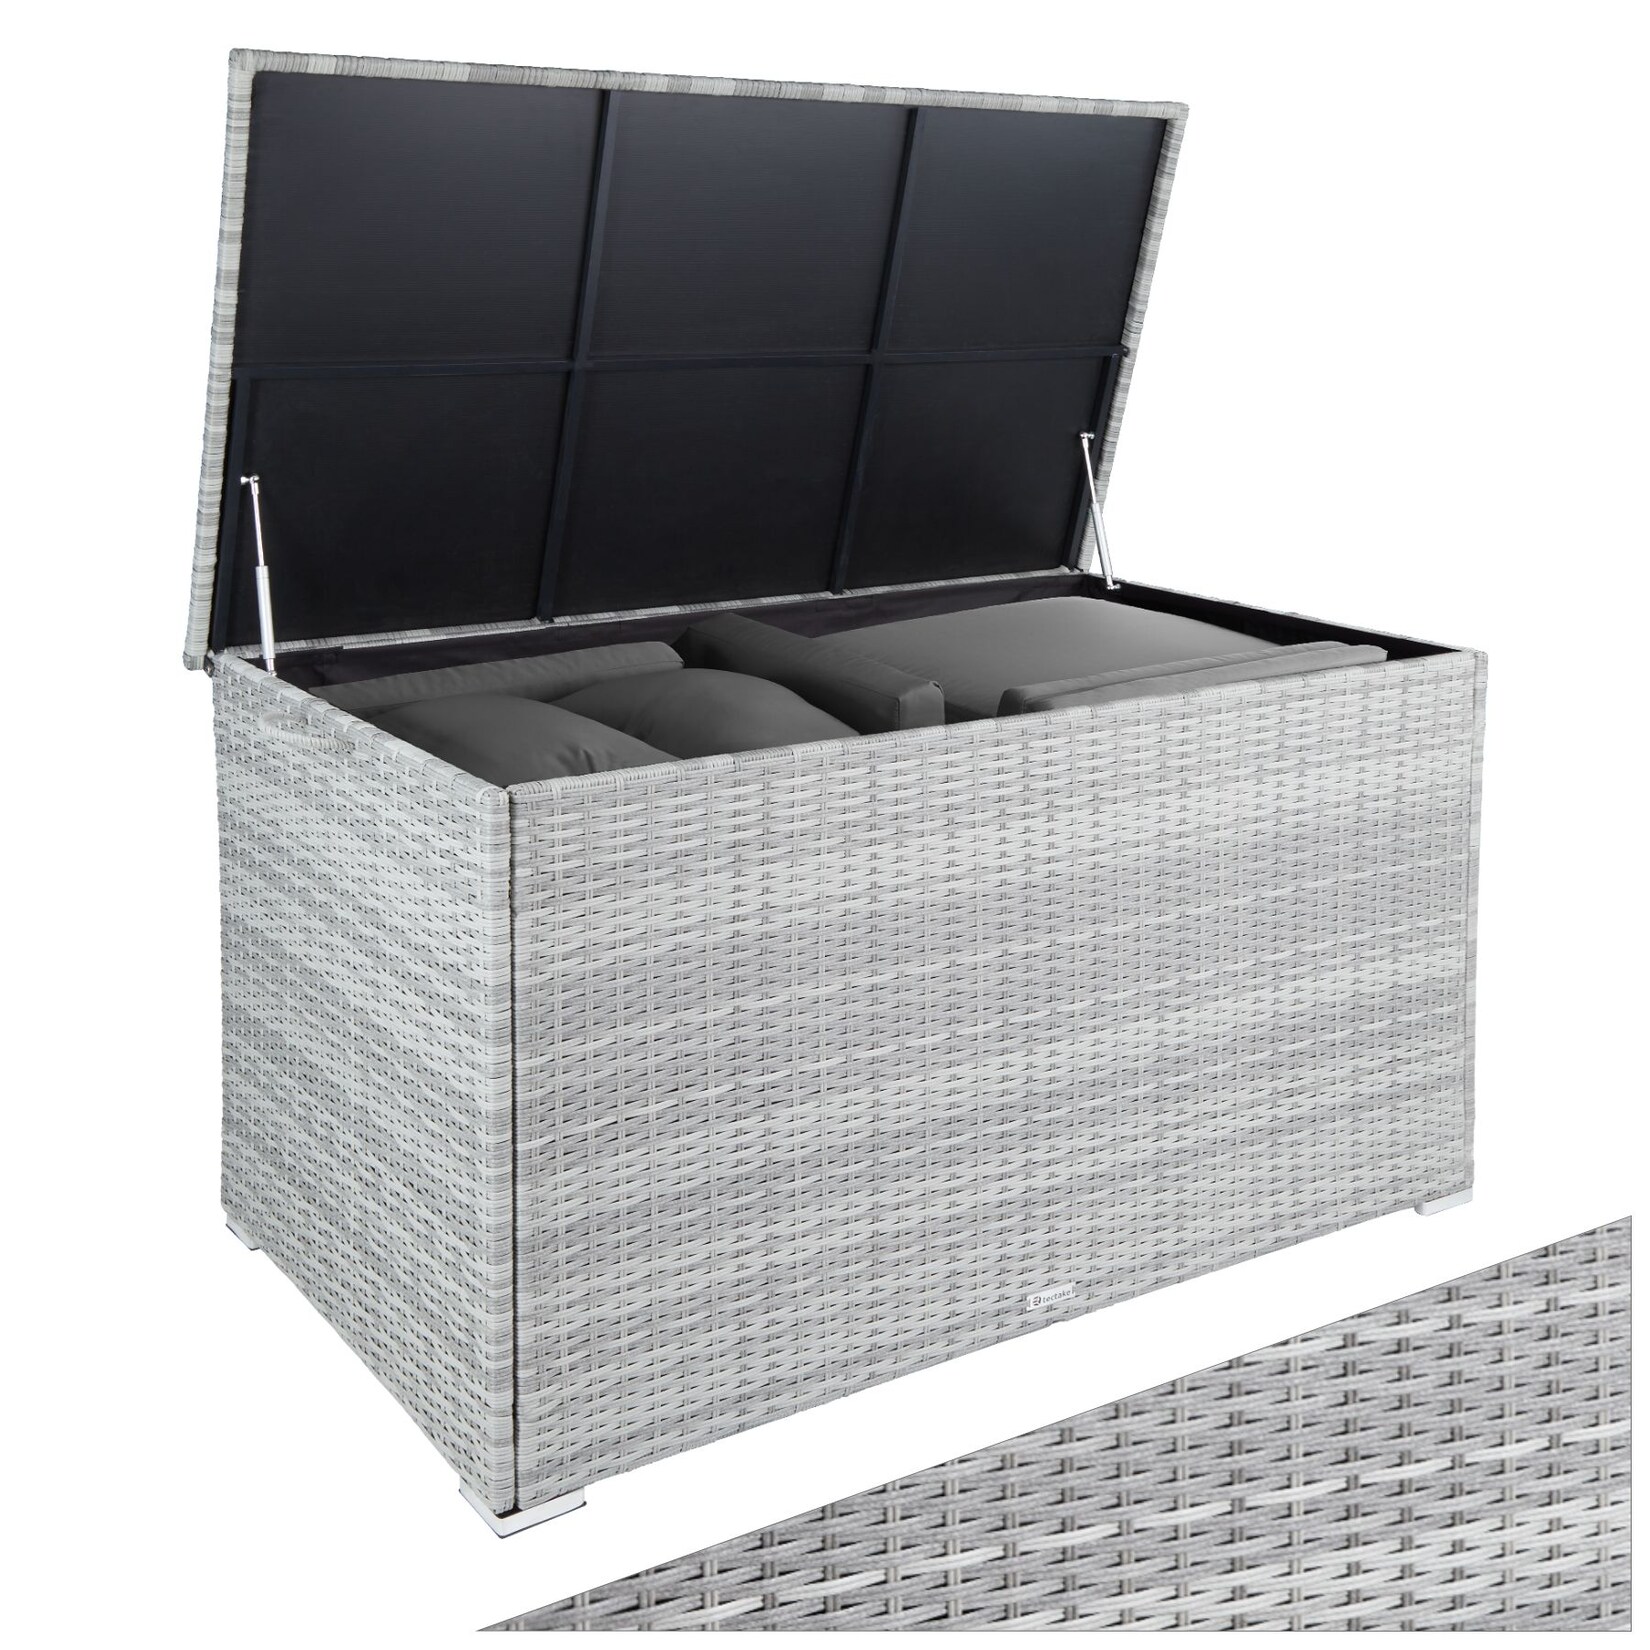 tectake® Auflagenbox, mit Aluminiumgestell und Rattangeflecht, komfortable Hubautomatik, 145 x 82,5 x 79,5 cm